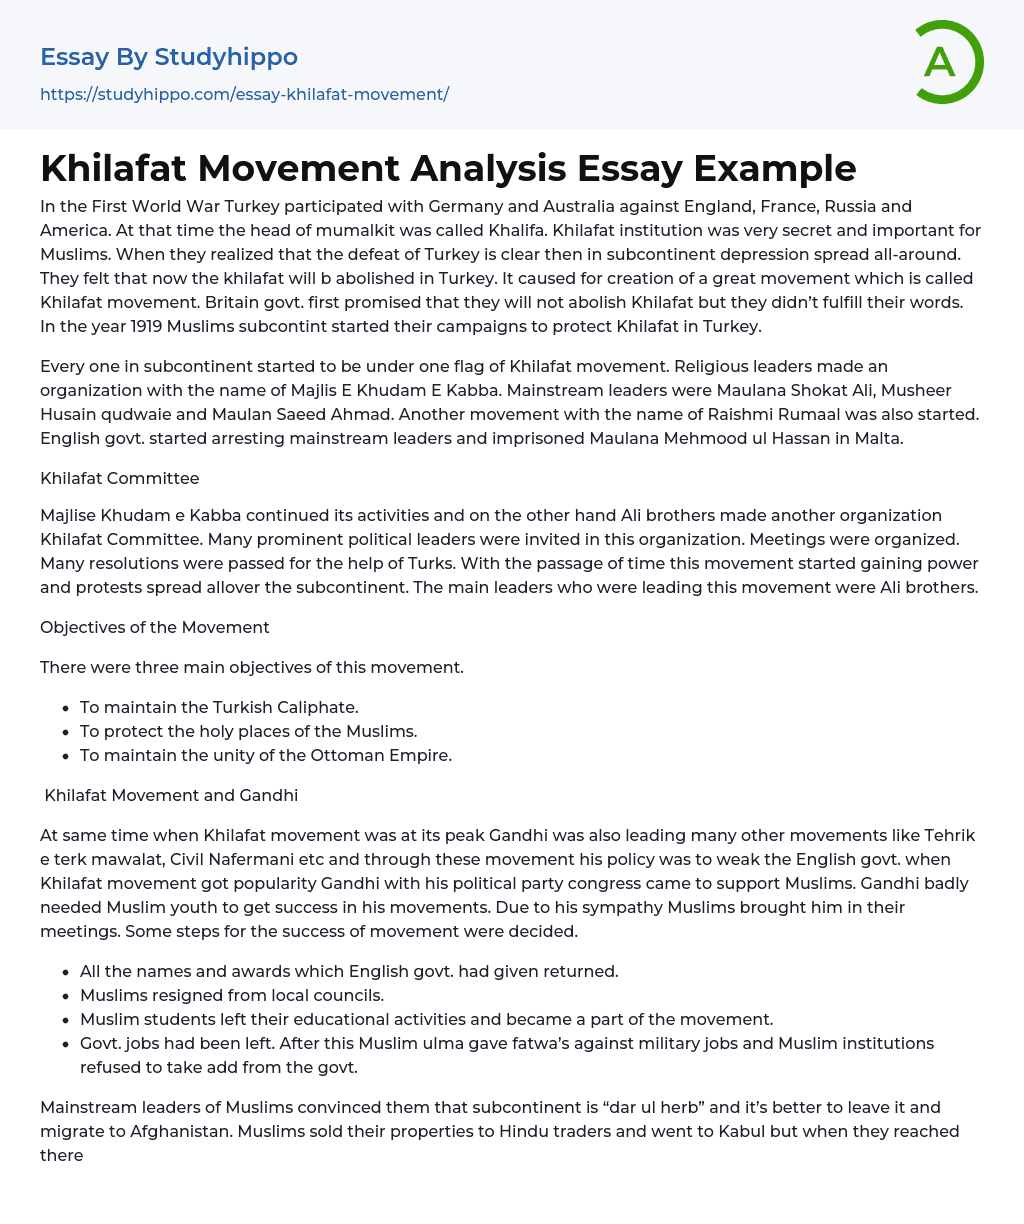 write an essay on khilafat movement